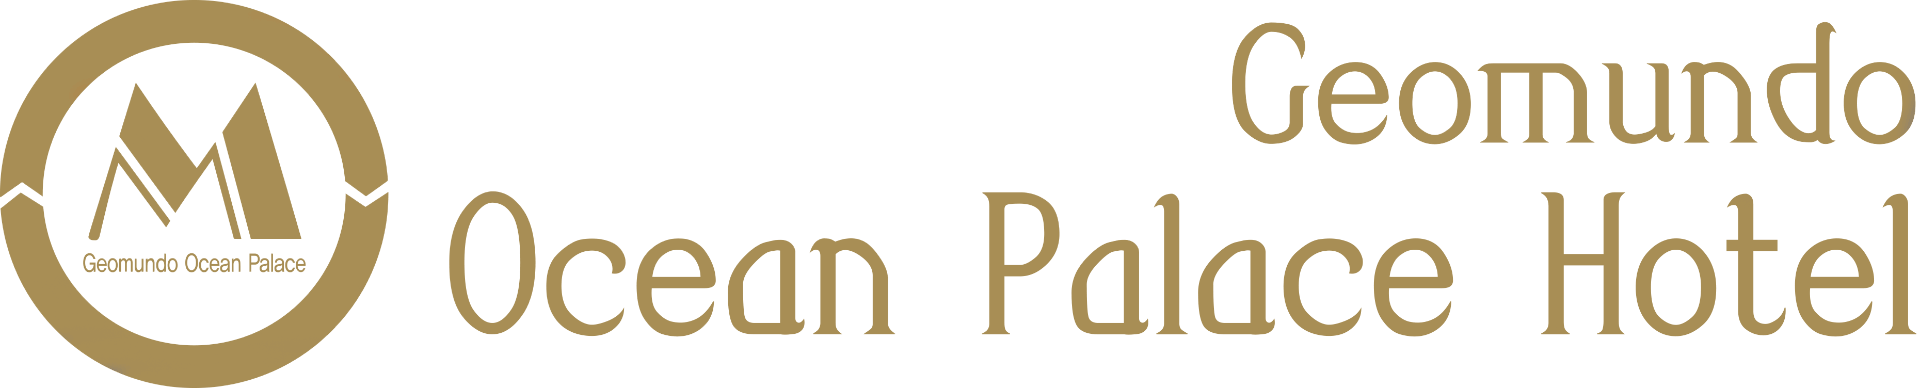 Geomundo Ocean Palace Hotel Logo